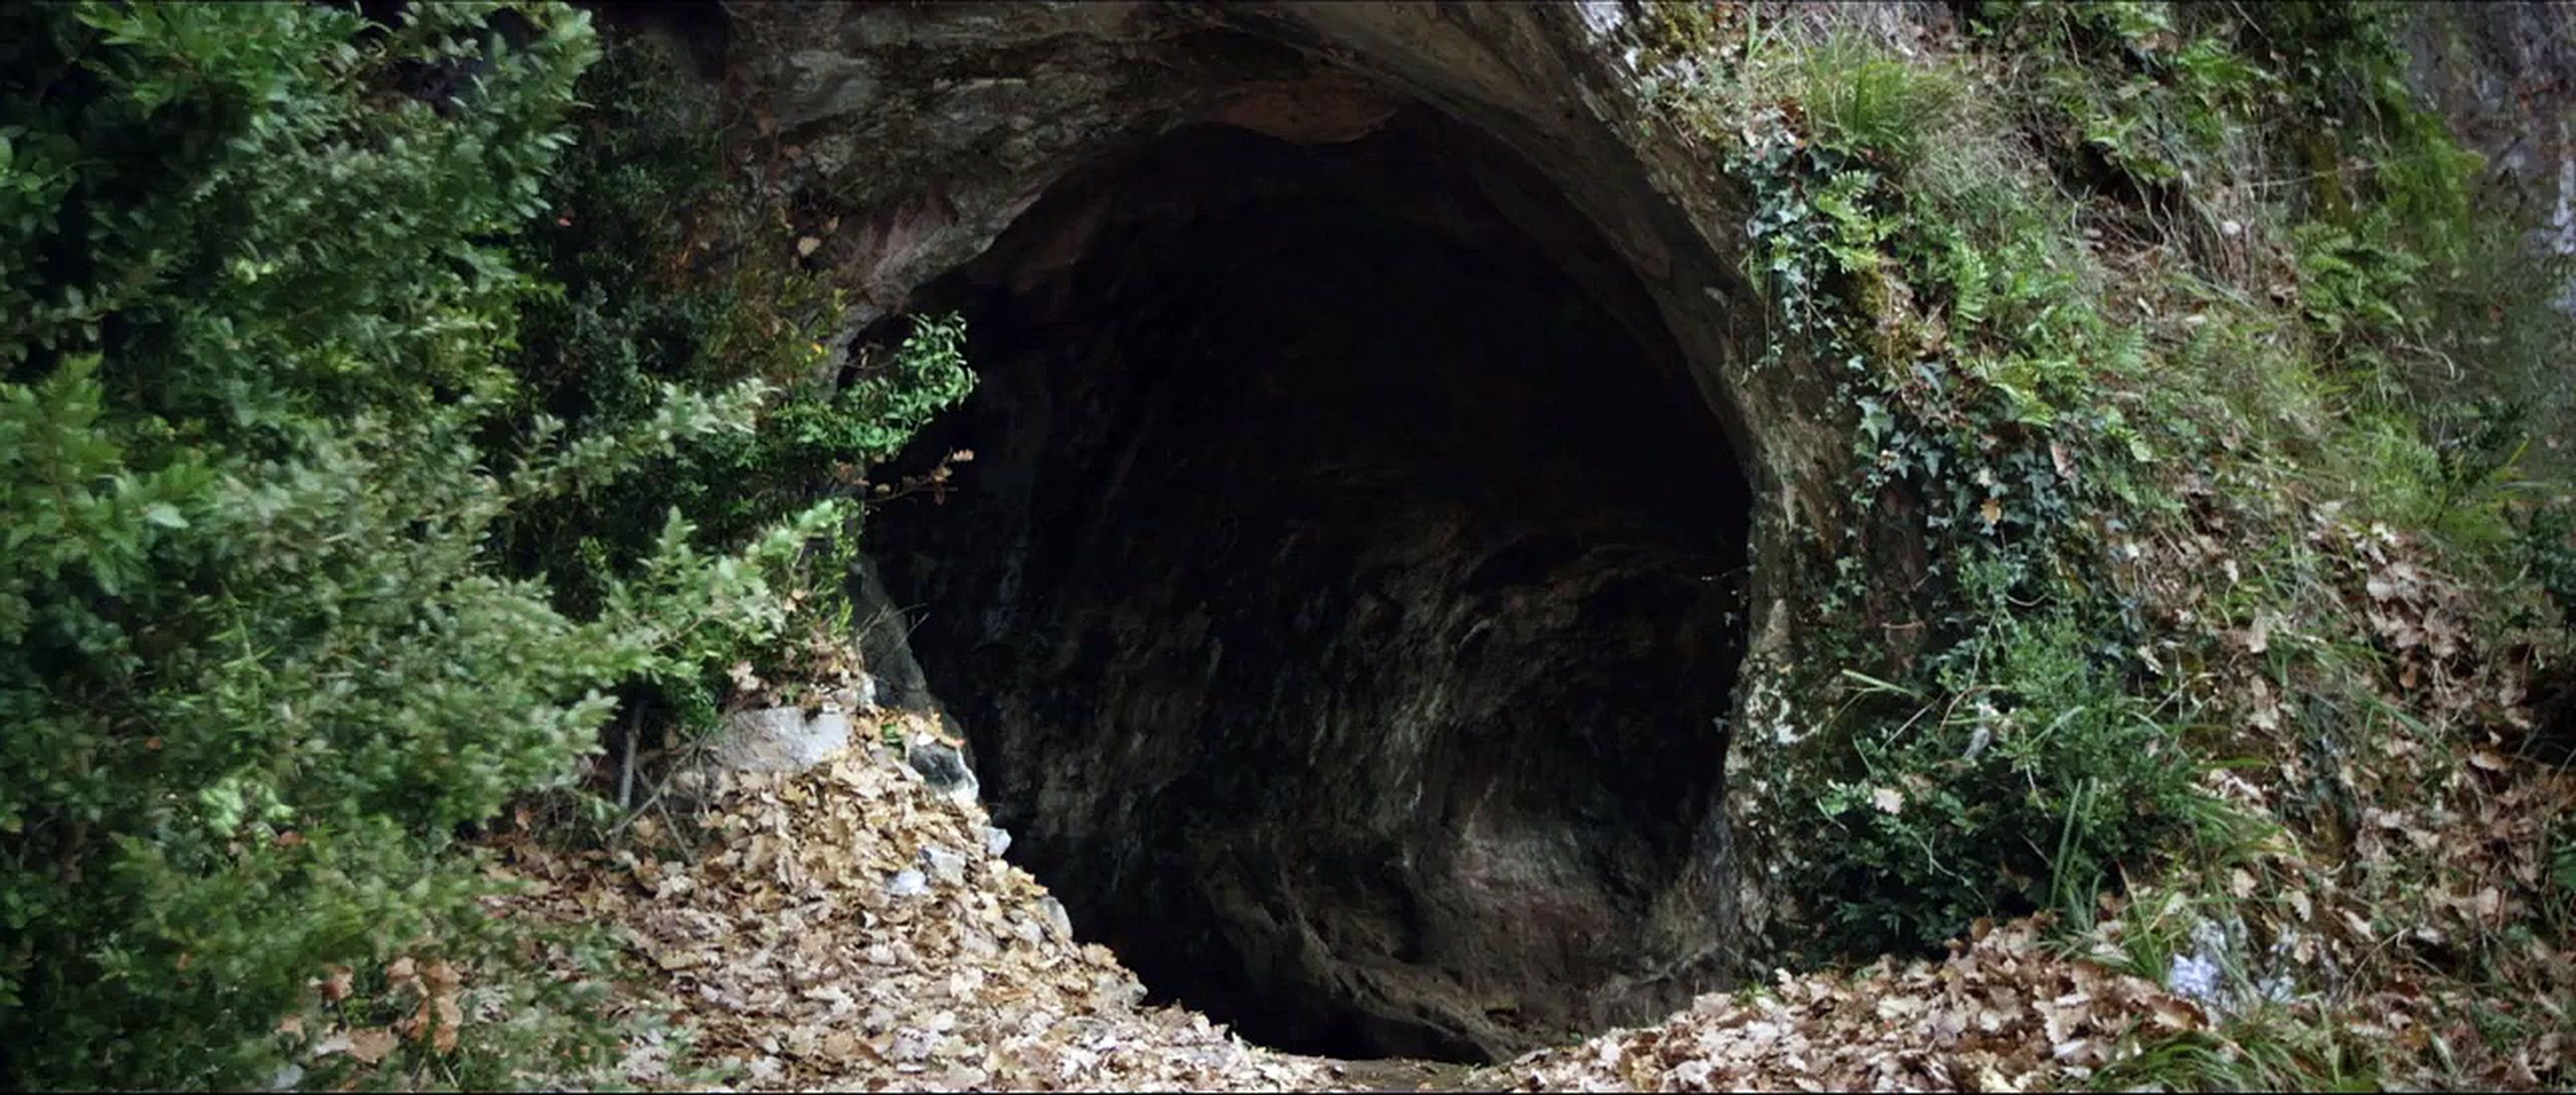 Far Cry Primal – Cavebnb Trailer - Concurso online